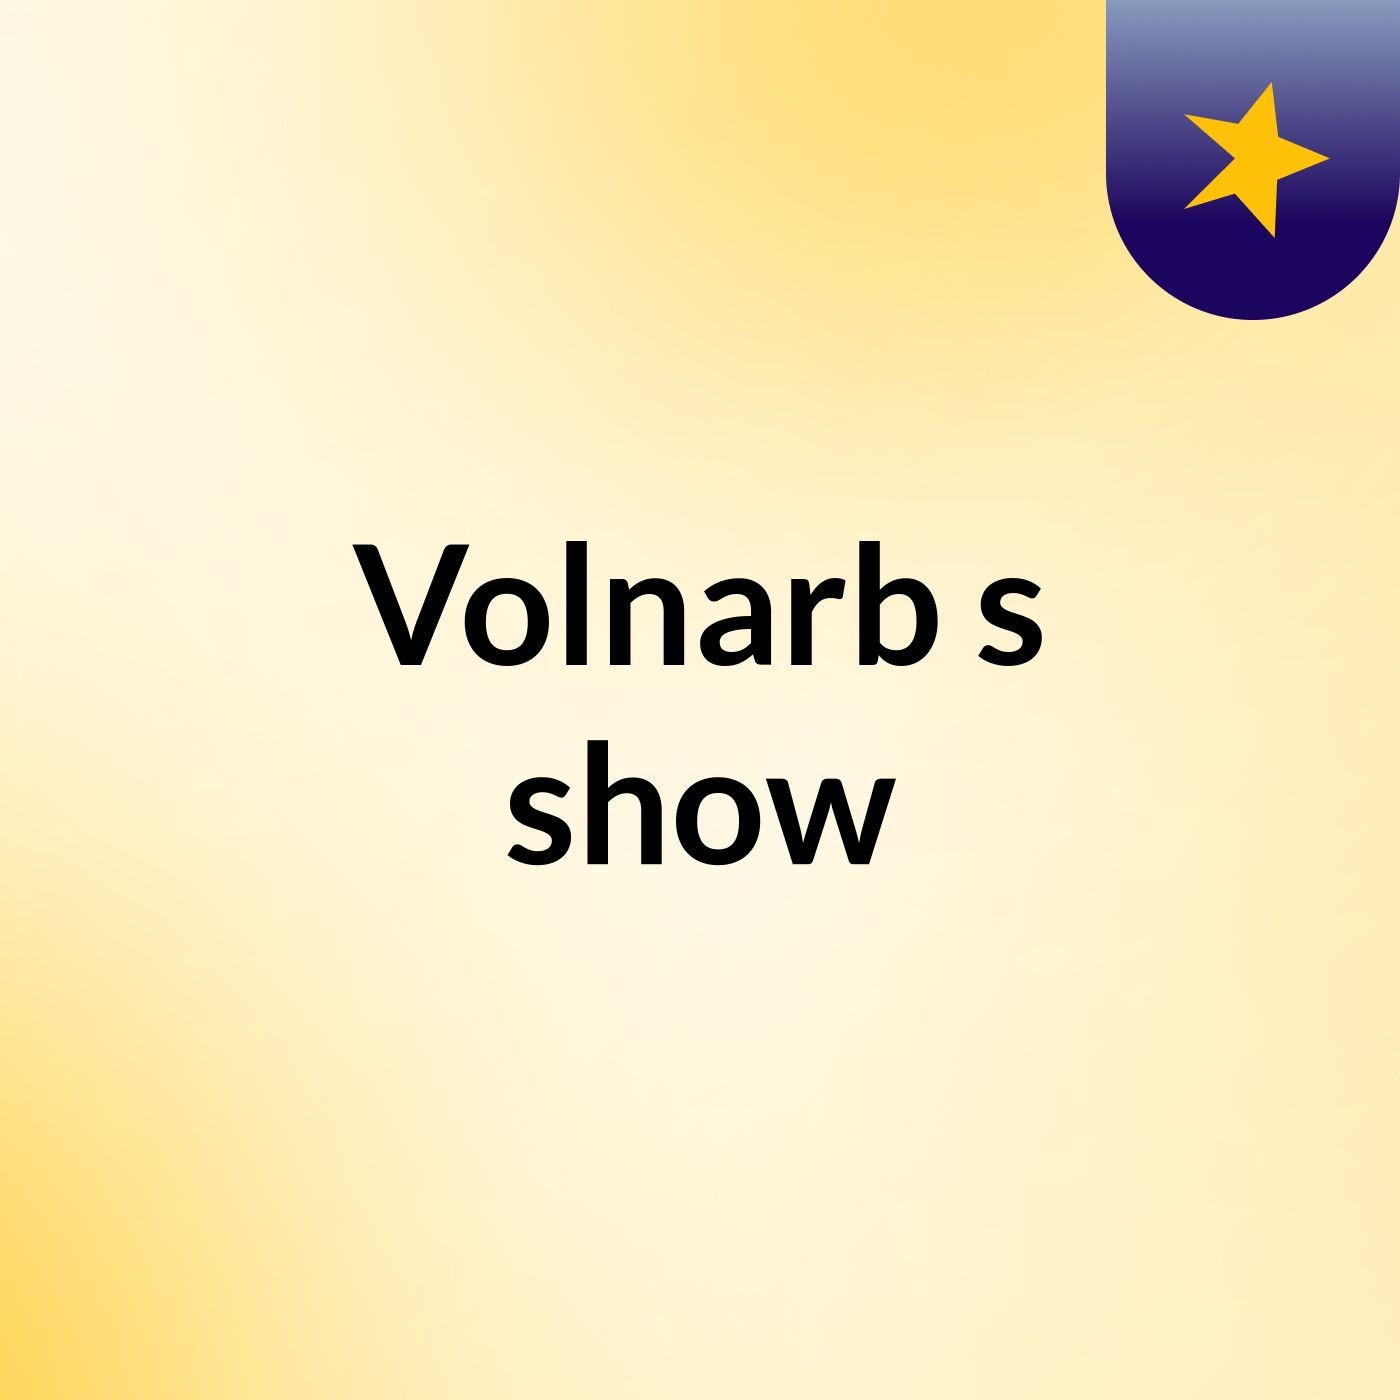 Volnarb's show